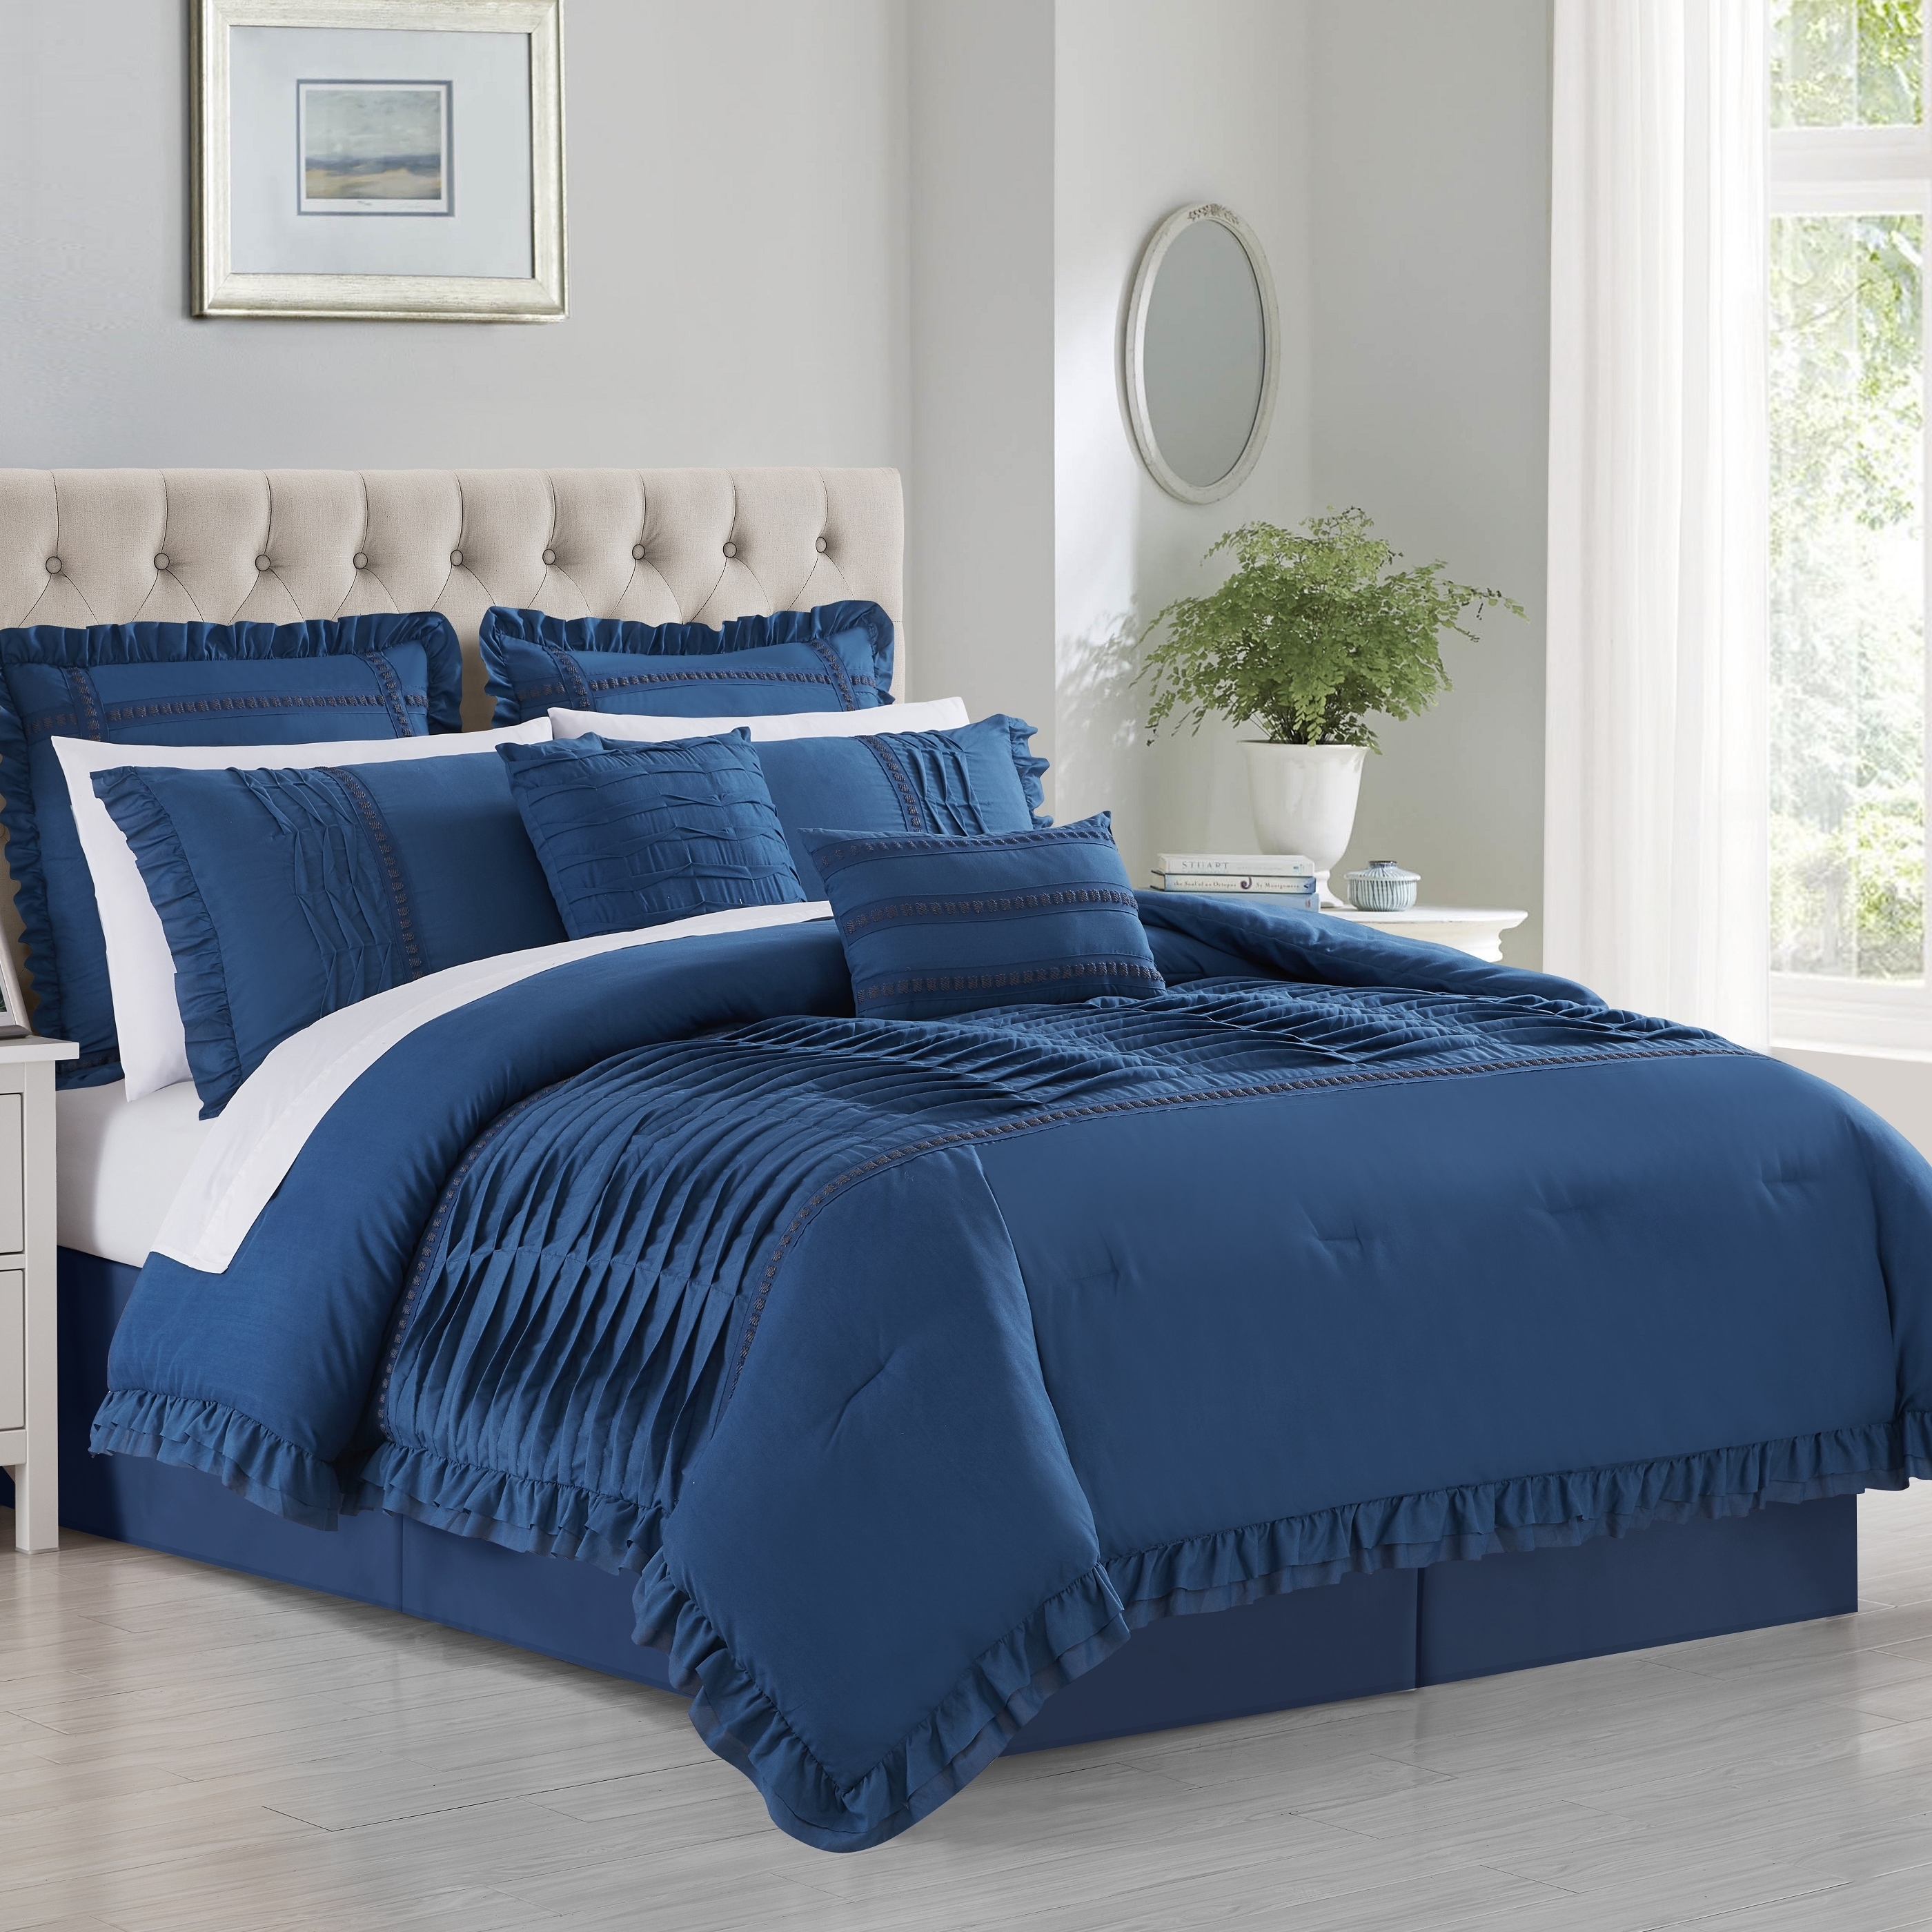 Yvonna 8 Piece Comforter Set Ruffled Pleated Flange Border Design Bedding - Blue, Queen